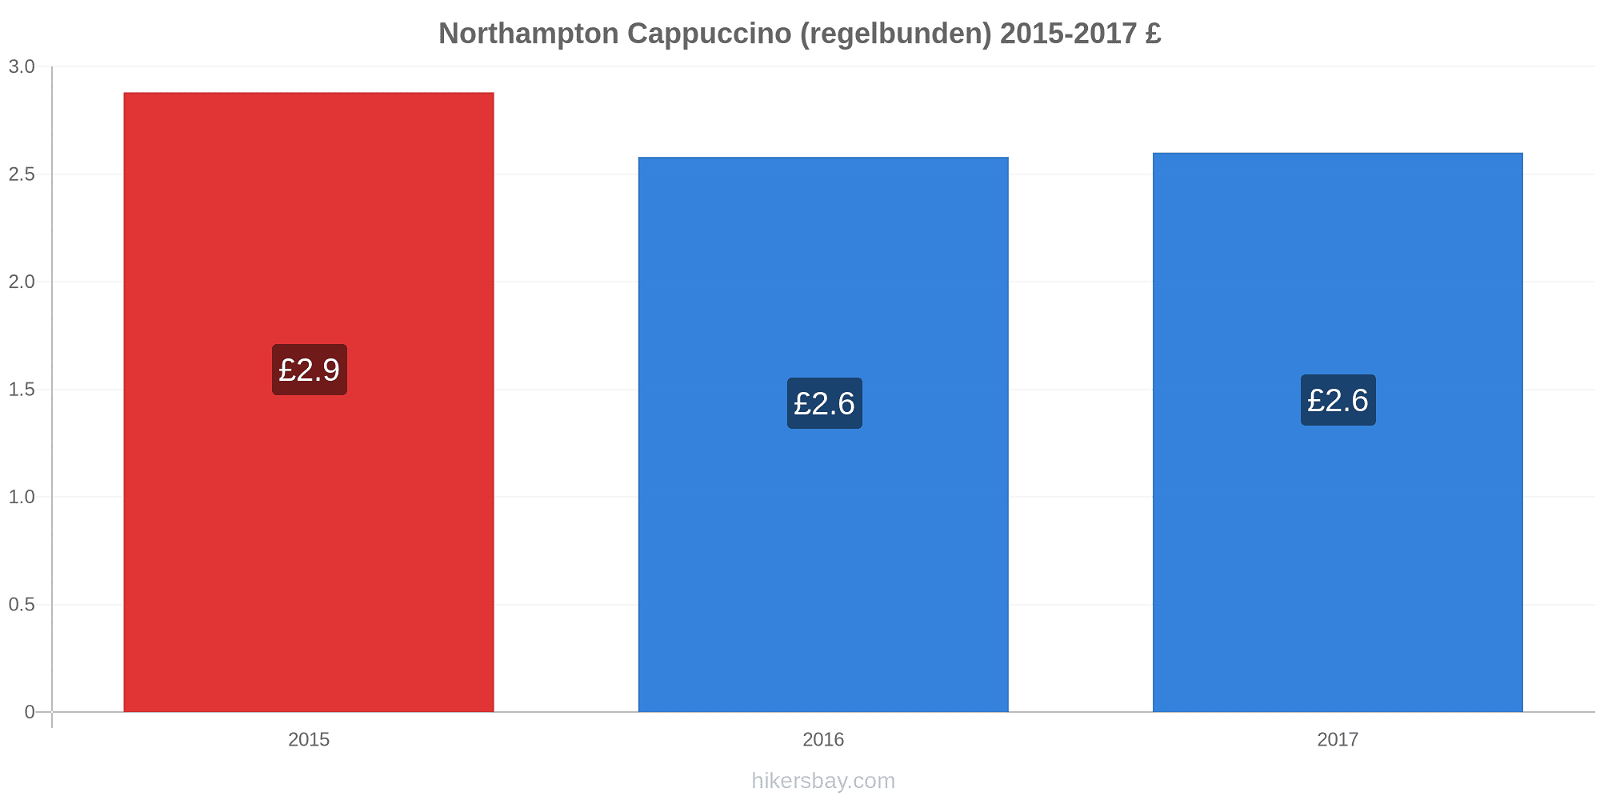 Northampton prisförändringar Cappuccino (regelbunden) hikersbay.com